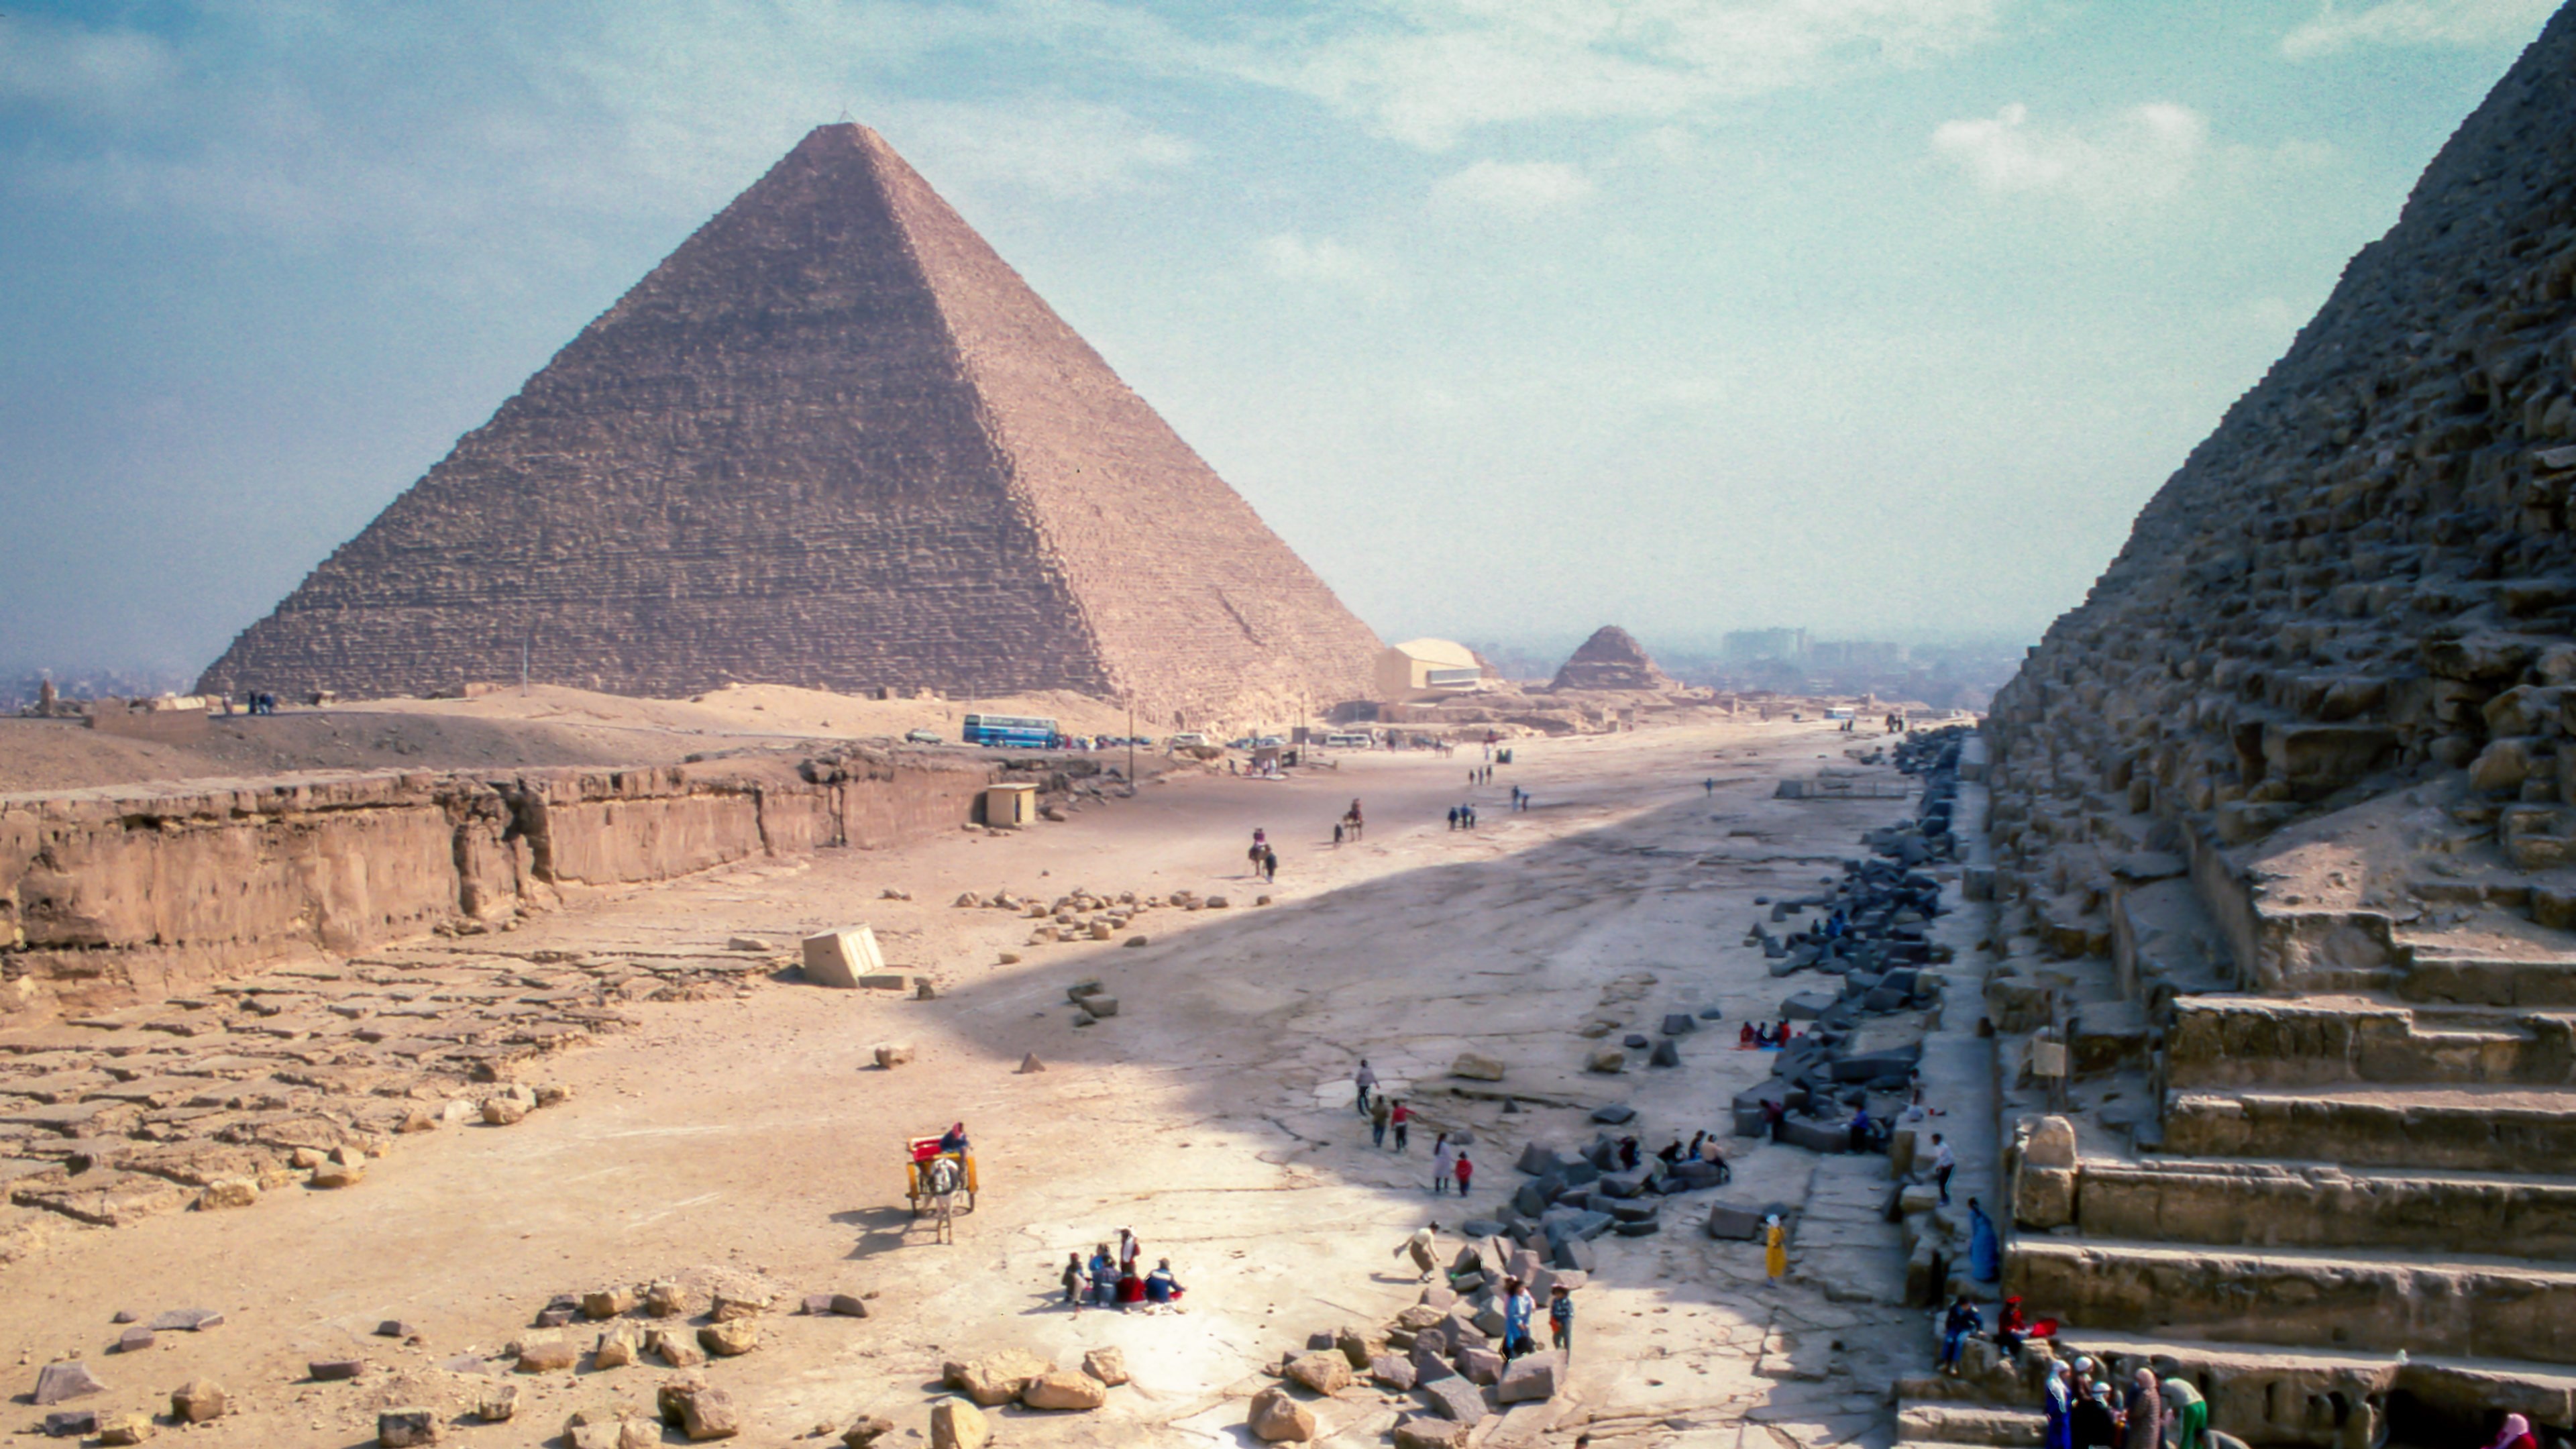 Wallpaper / ruin pyramid desert and egypt HD 4k wallpaper free download